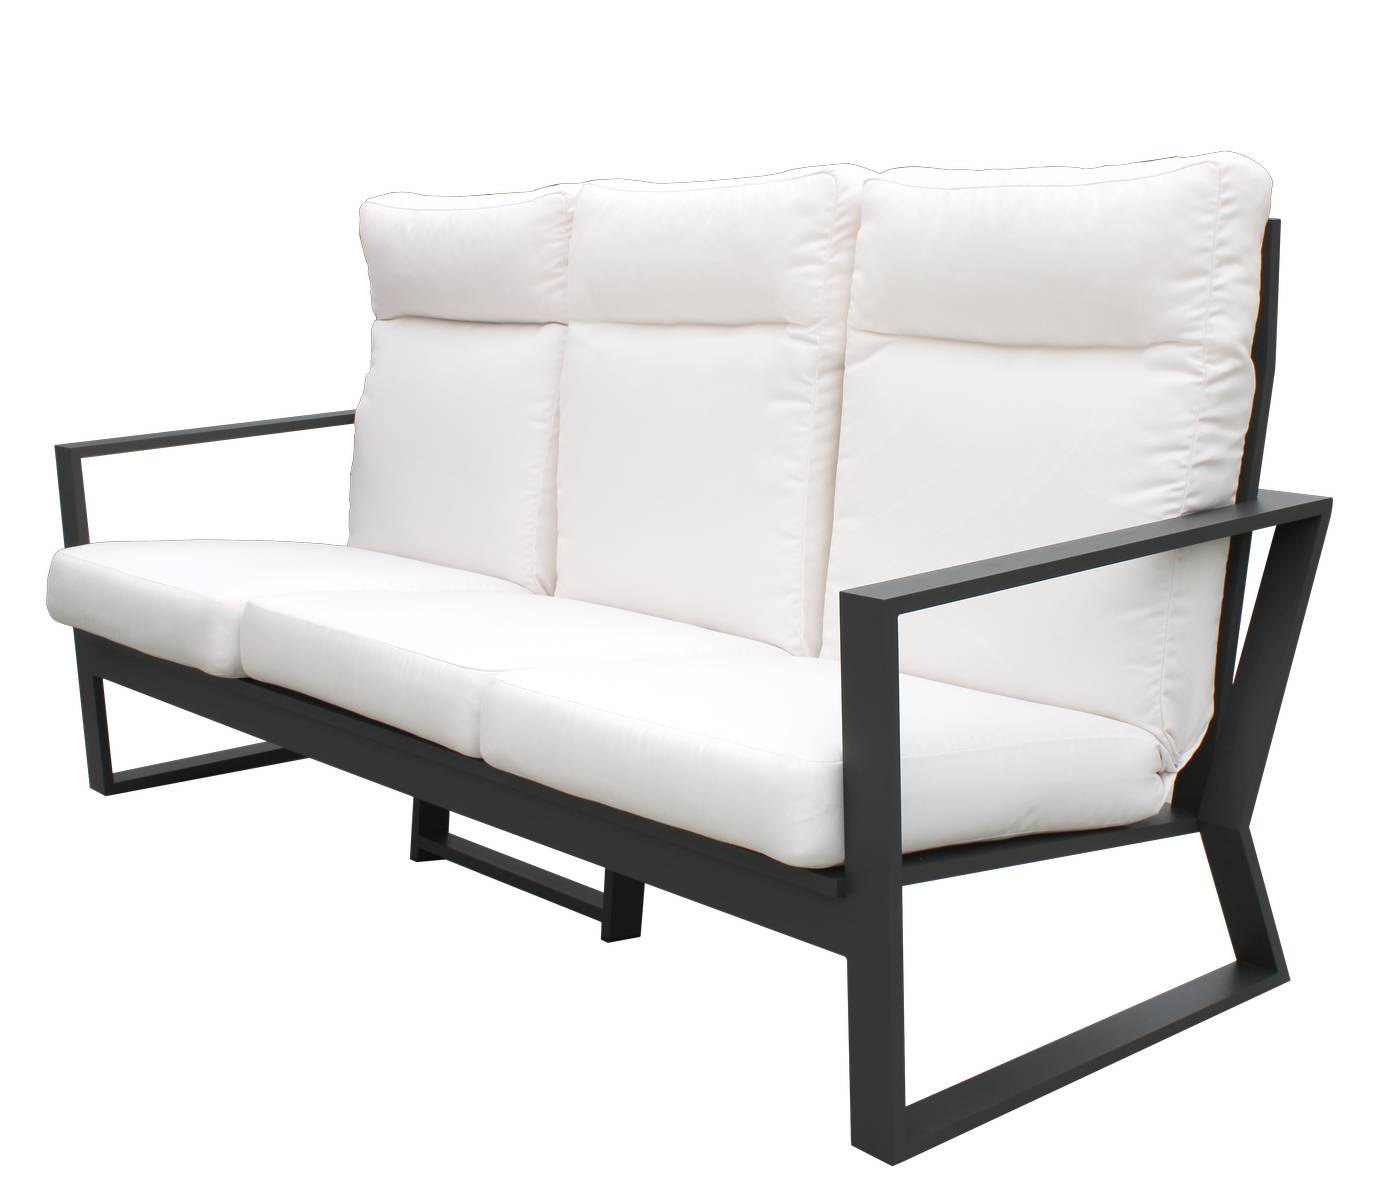 Sofá relax-confort 3 plazas con cojines desenfundables. Estructura de aluminio  color blanco, plata, marrón, champagne o antracita.